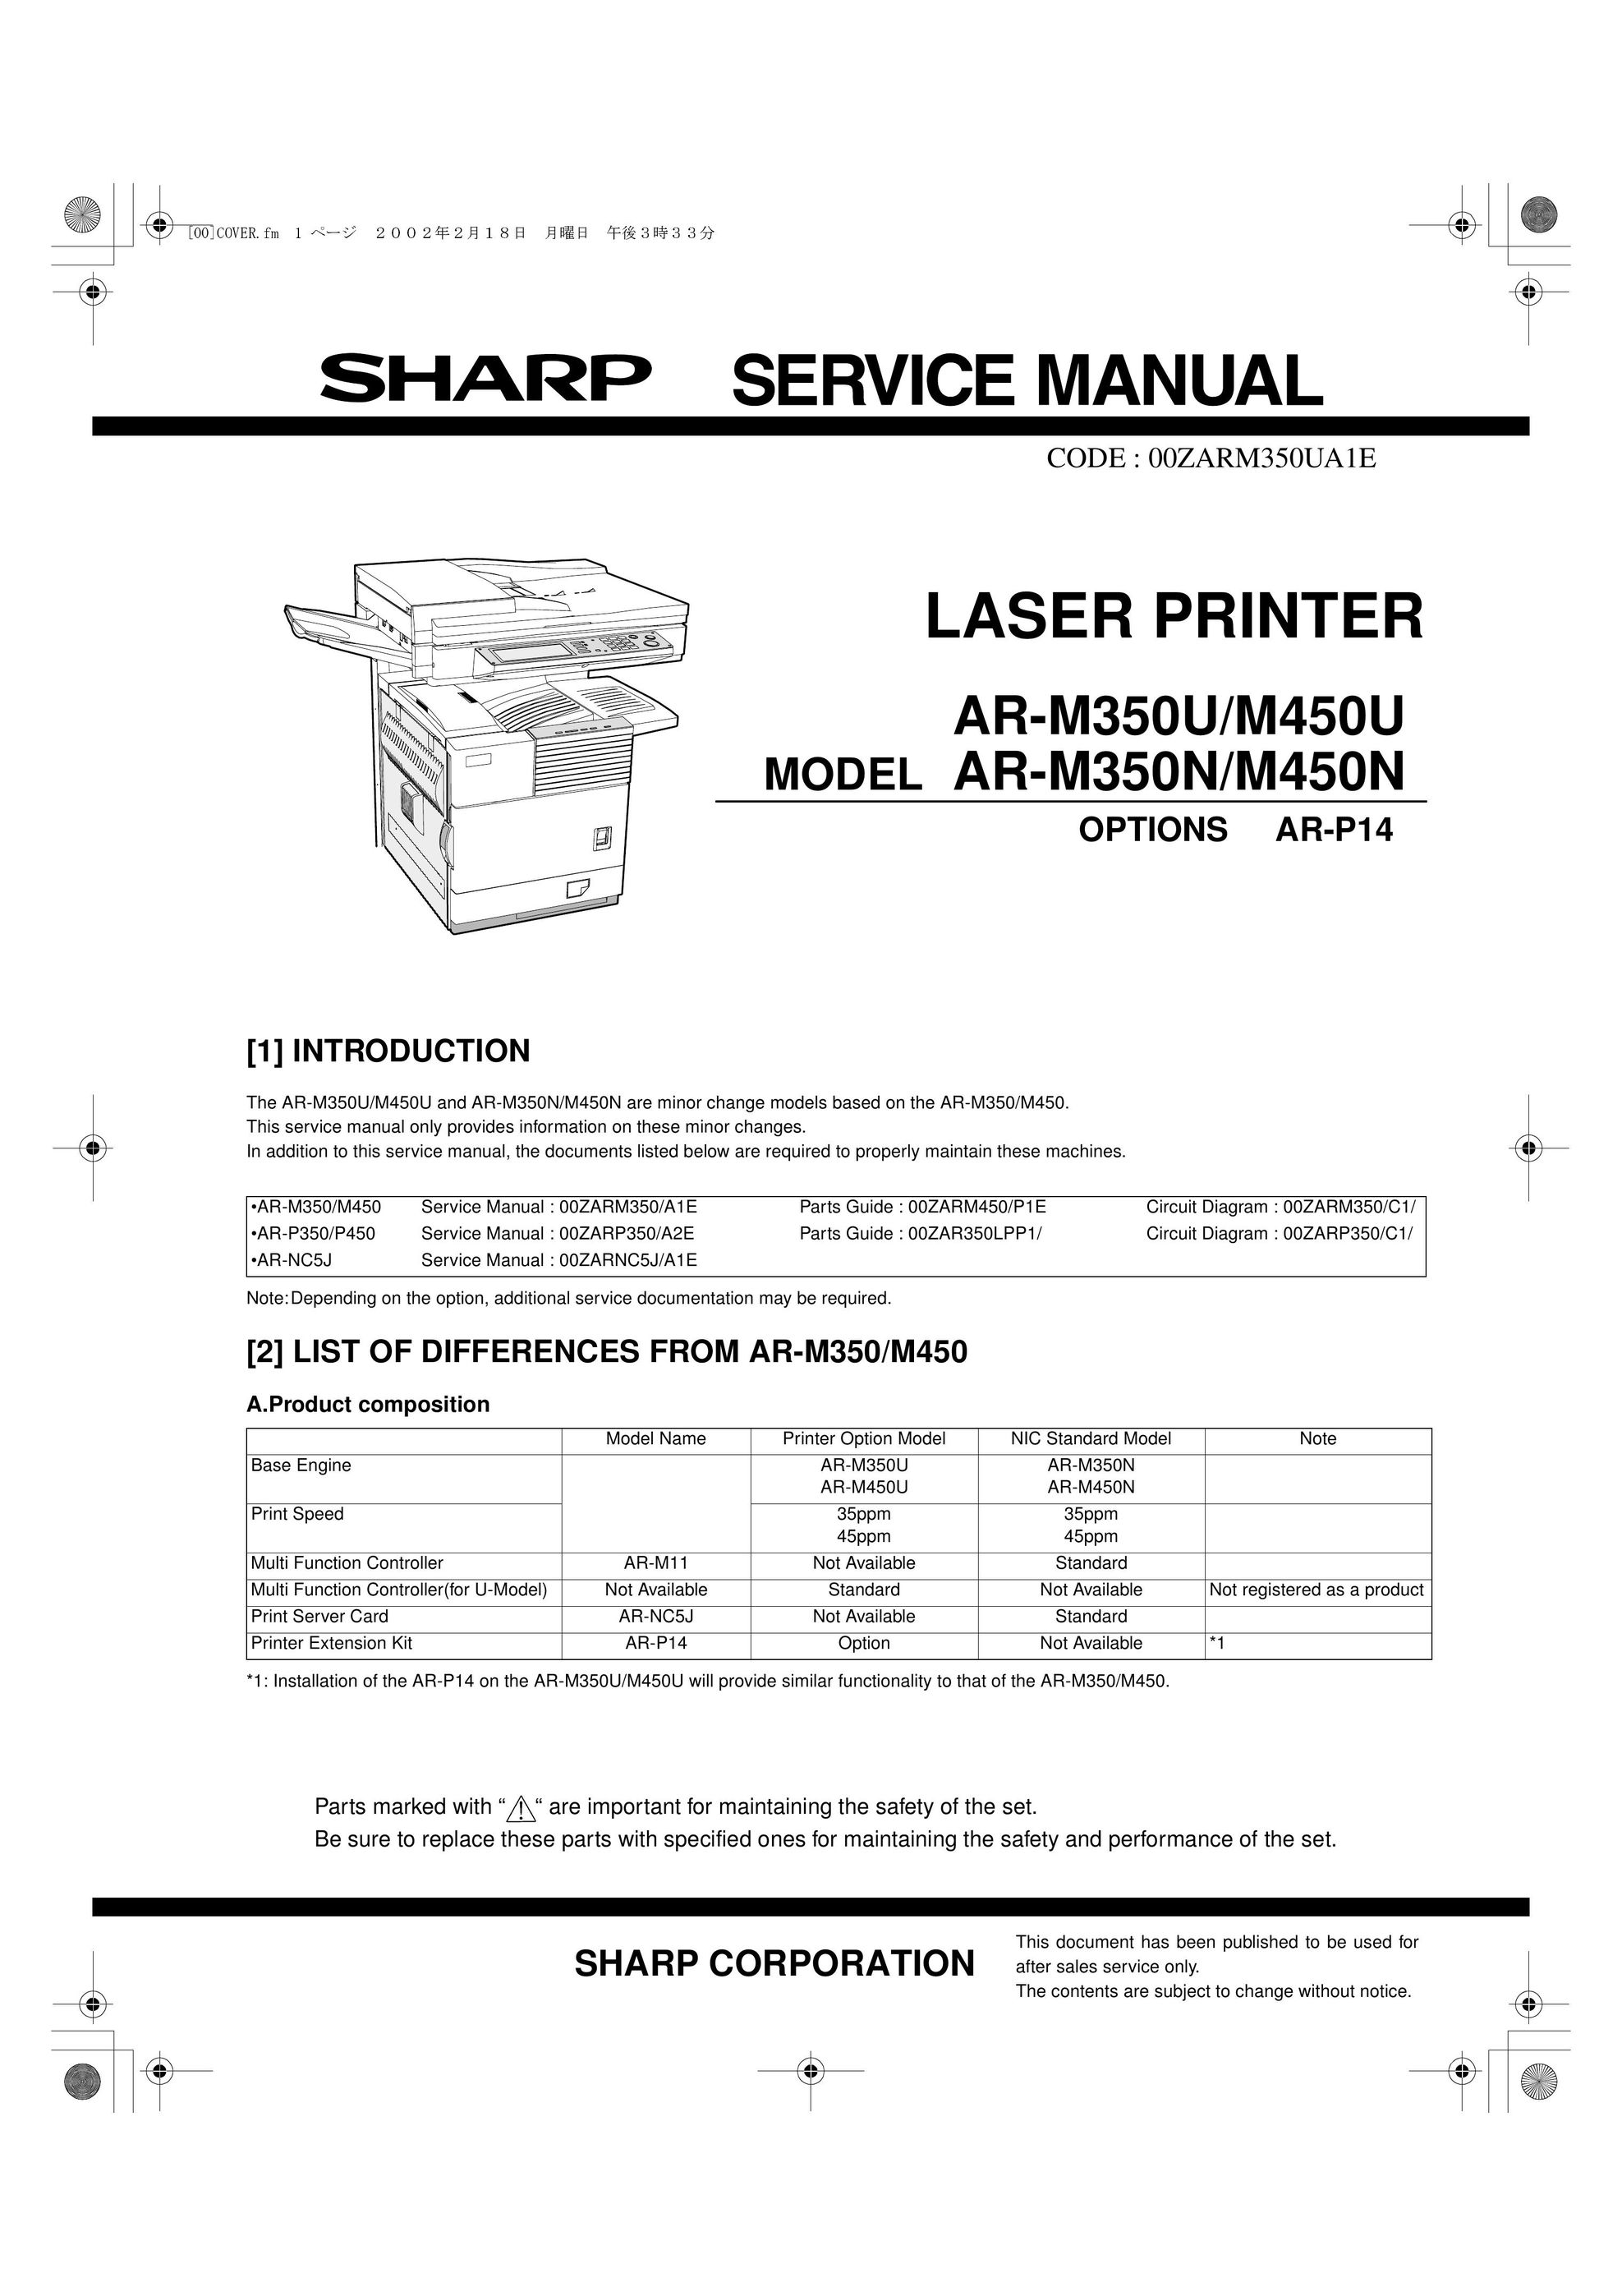 Sharp AR-M350U/M450U Printer User Manual